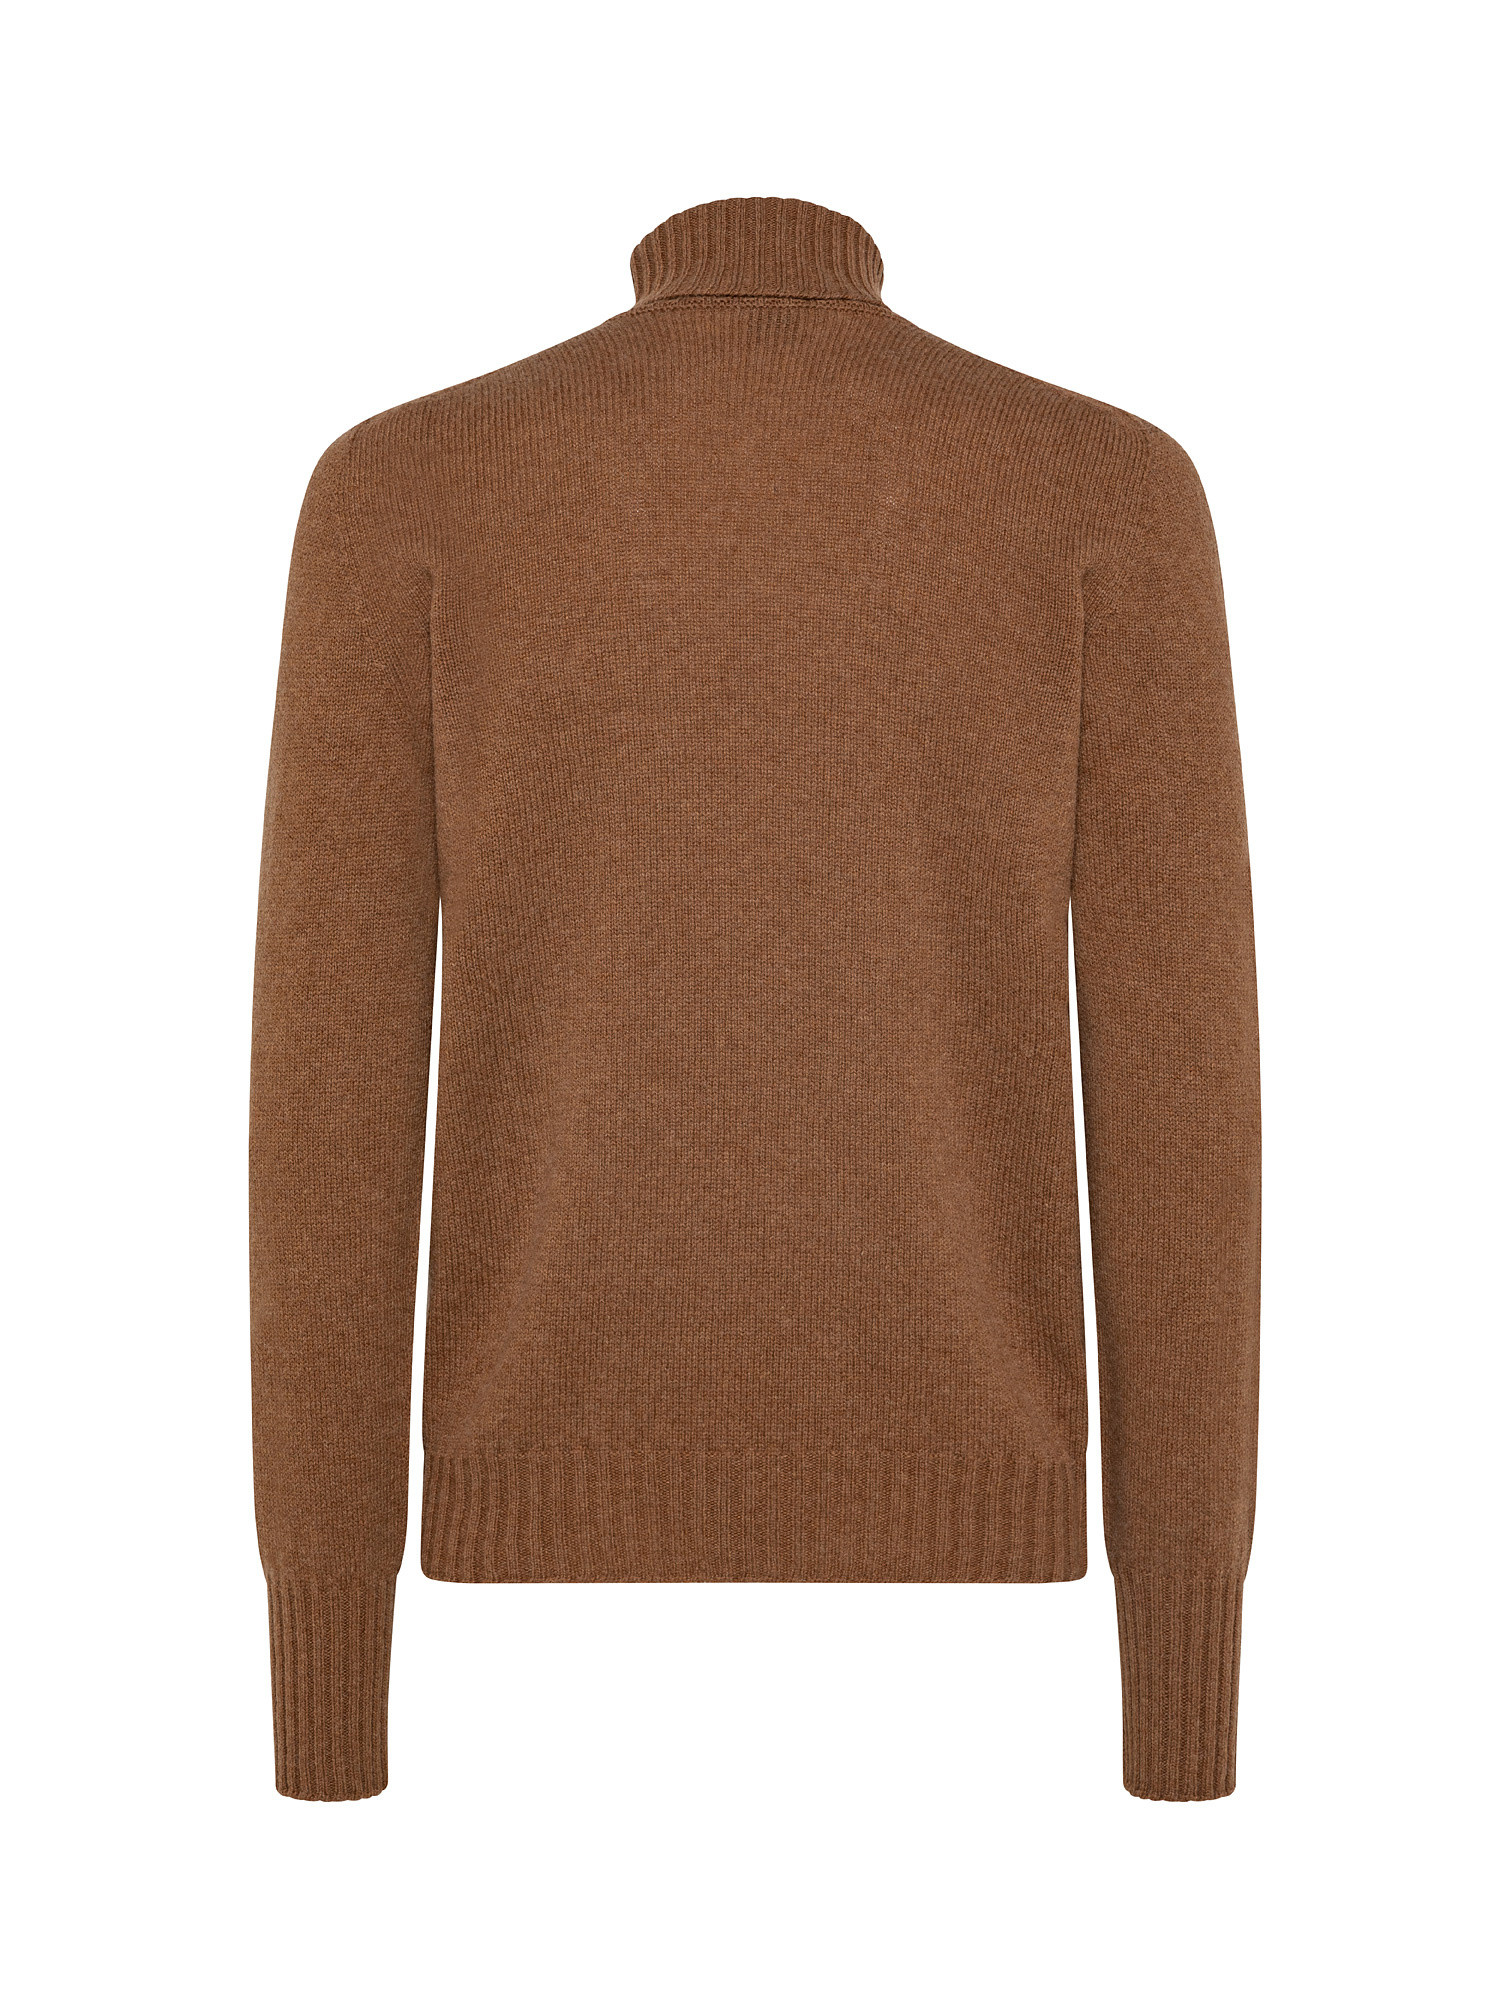 Fine wool turtleneck sweater, Light Brown, large image number 1